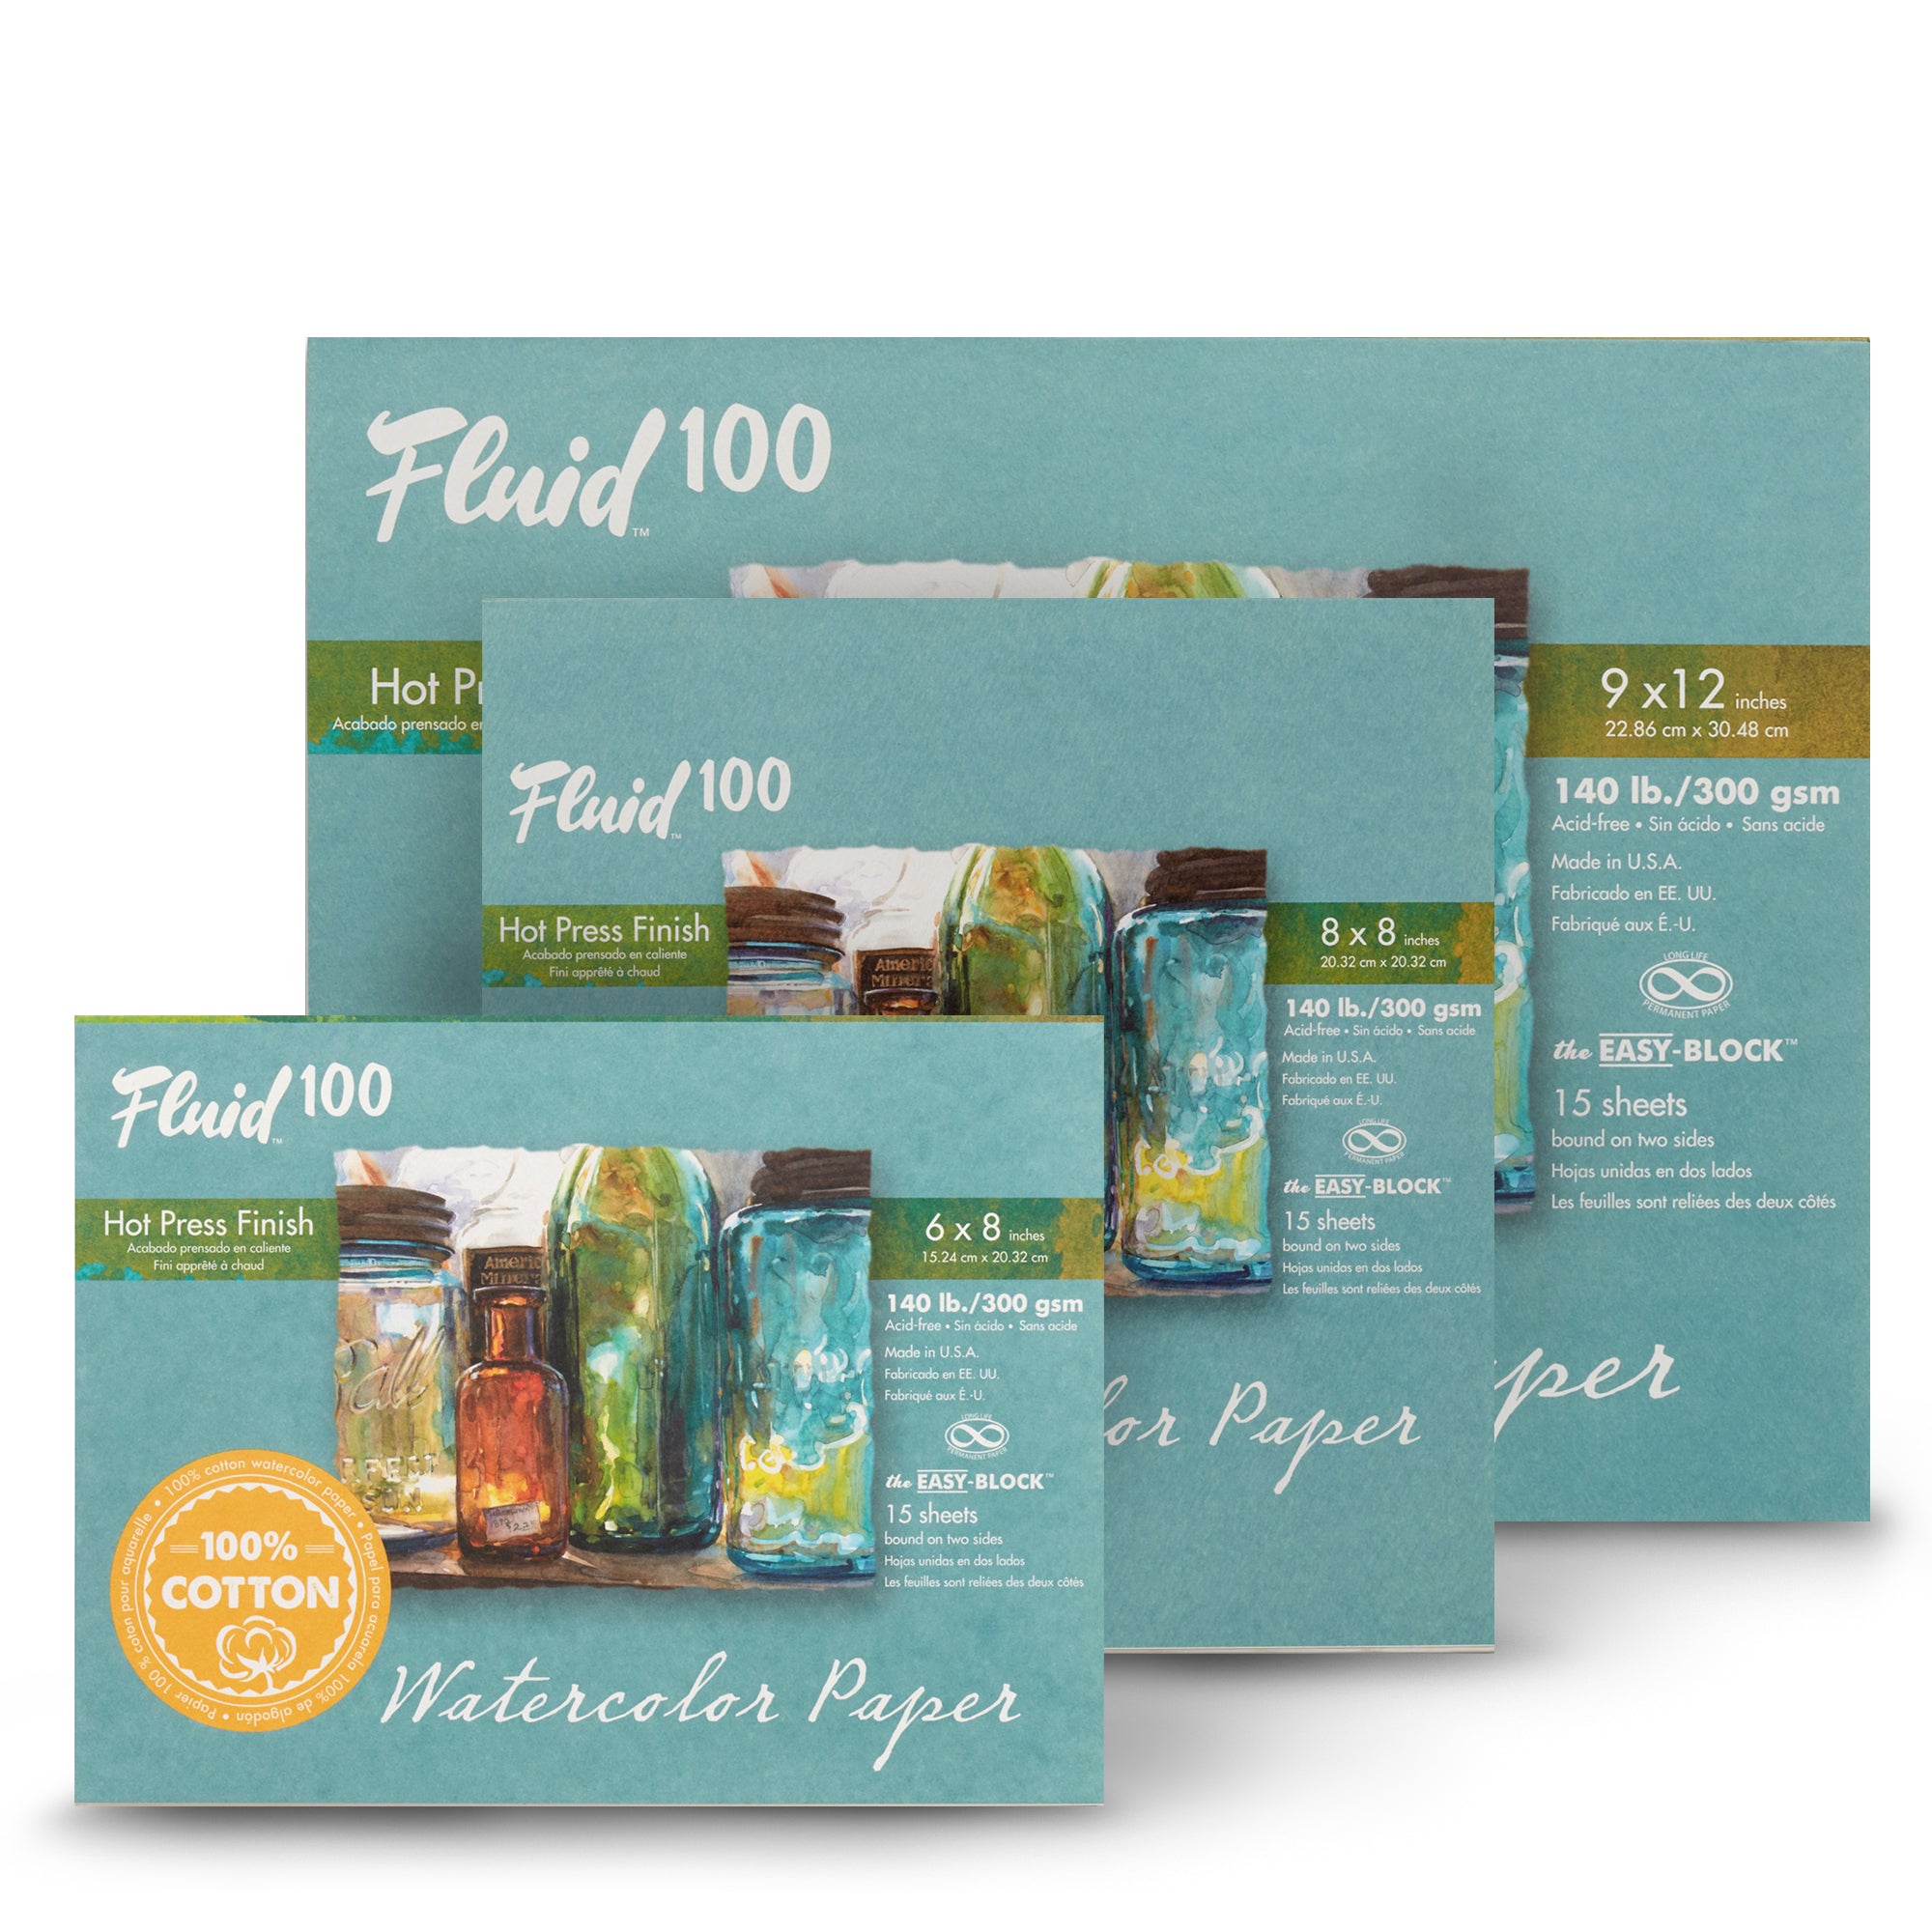 Fluid 100 Watercolor Paper Blocks